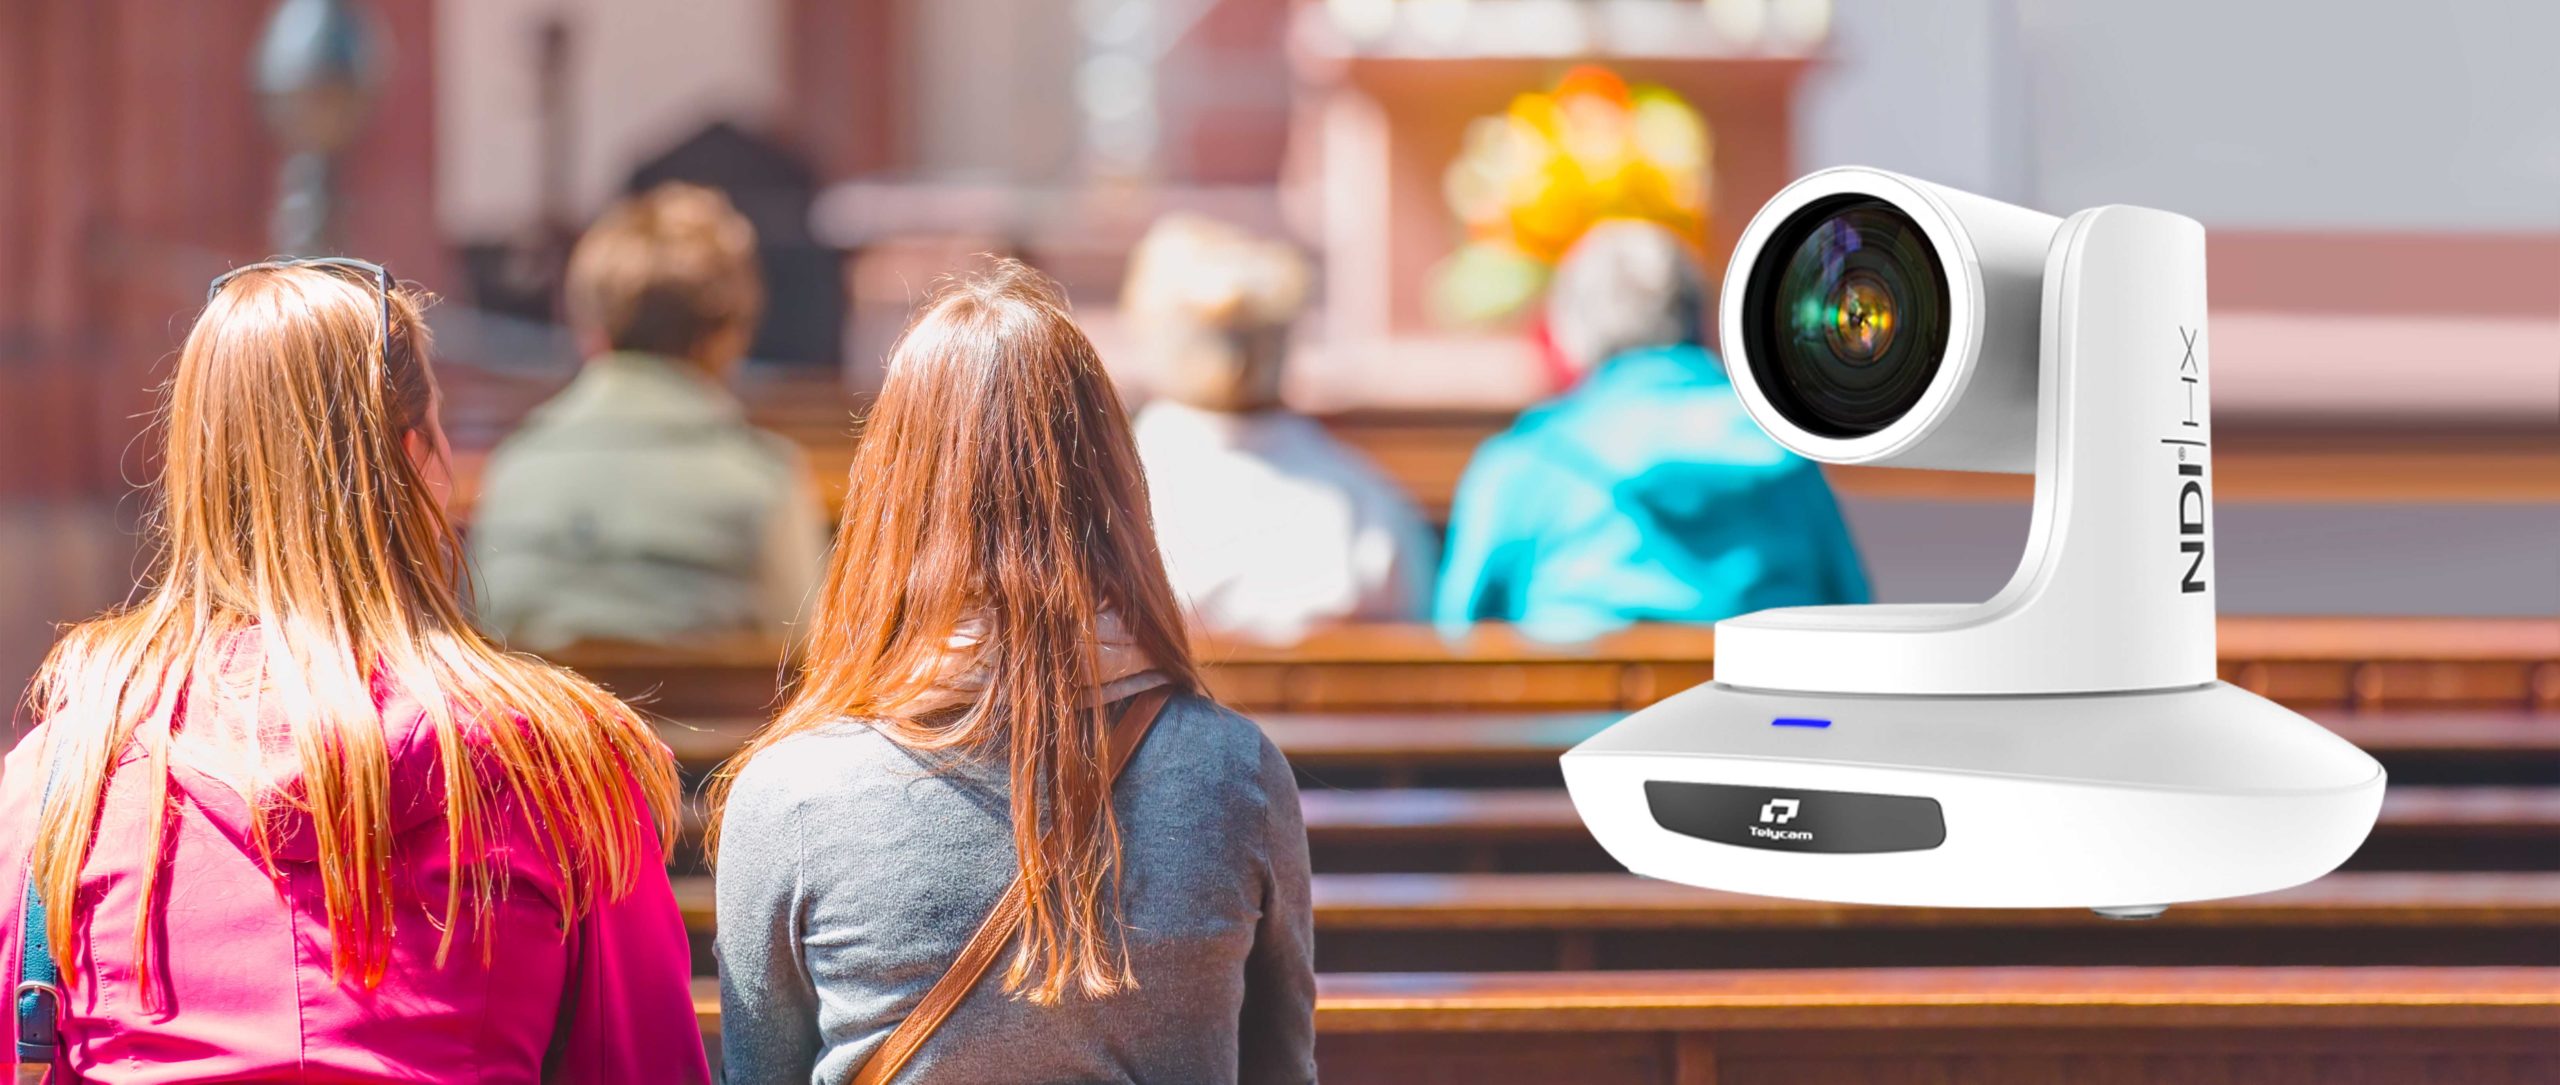 ptz Cameras for Live Streaming Church